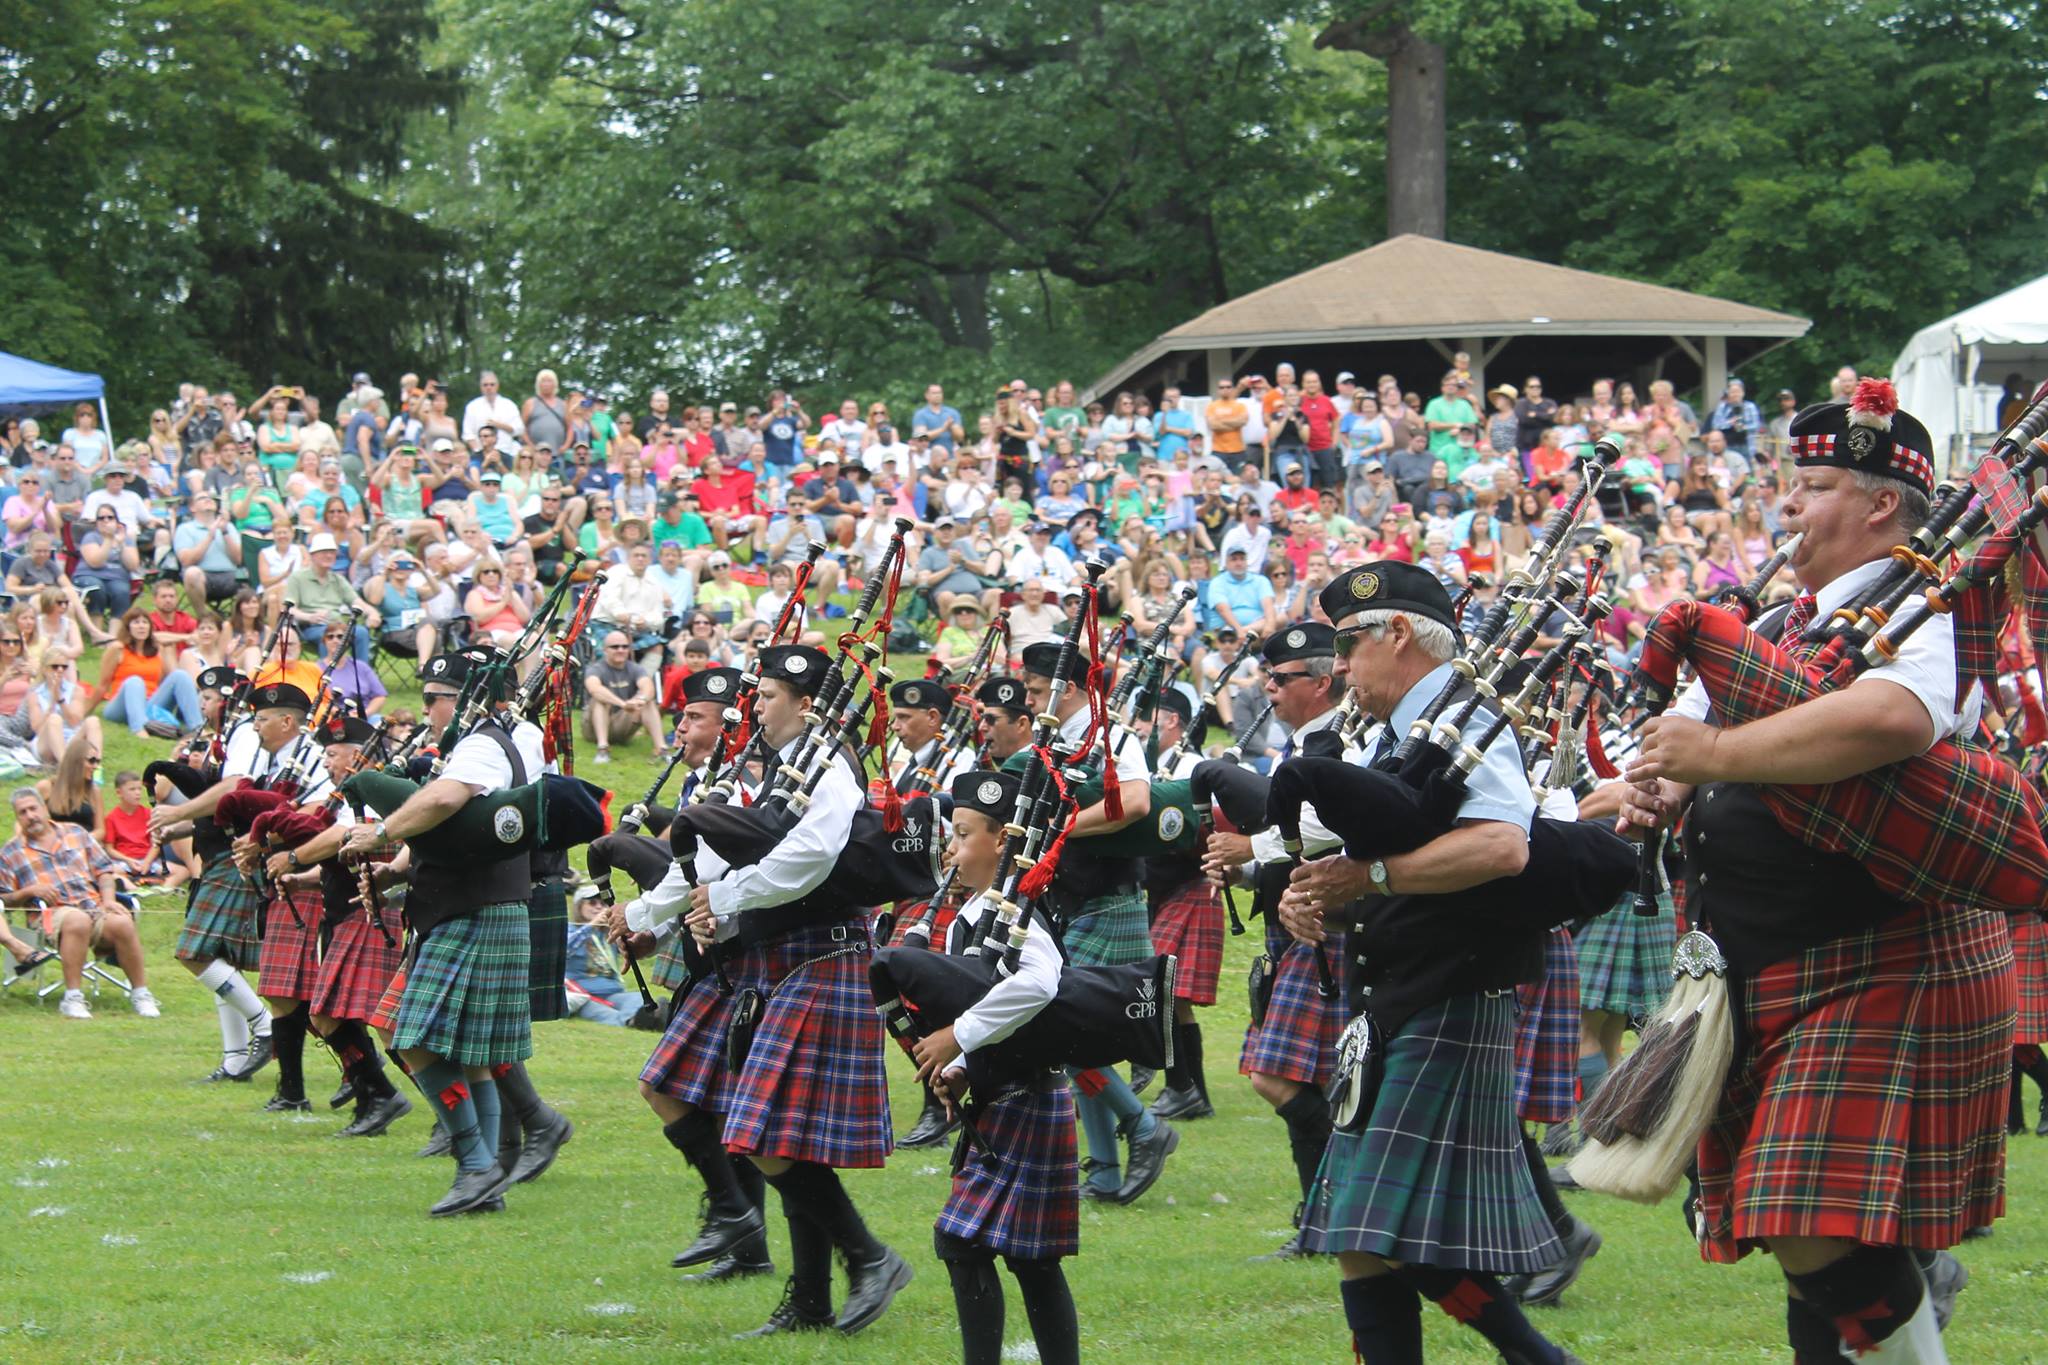 Eagle News Online Scottish Games and Celtic Festival returns Aug. 12